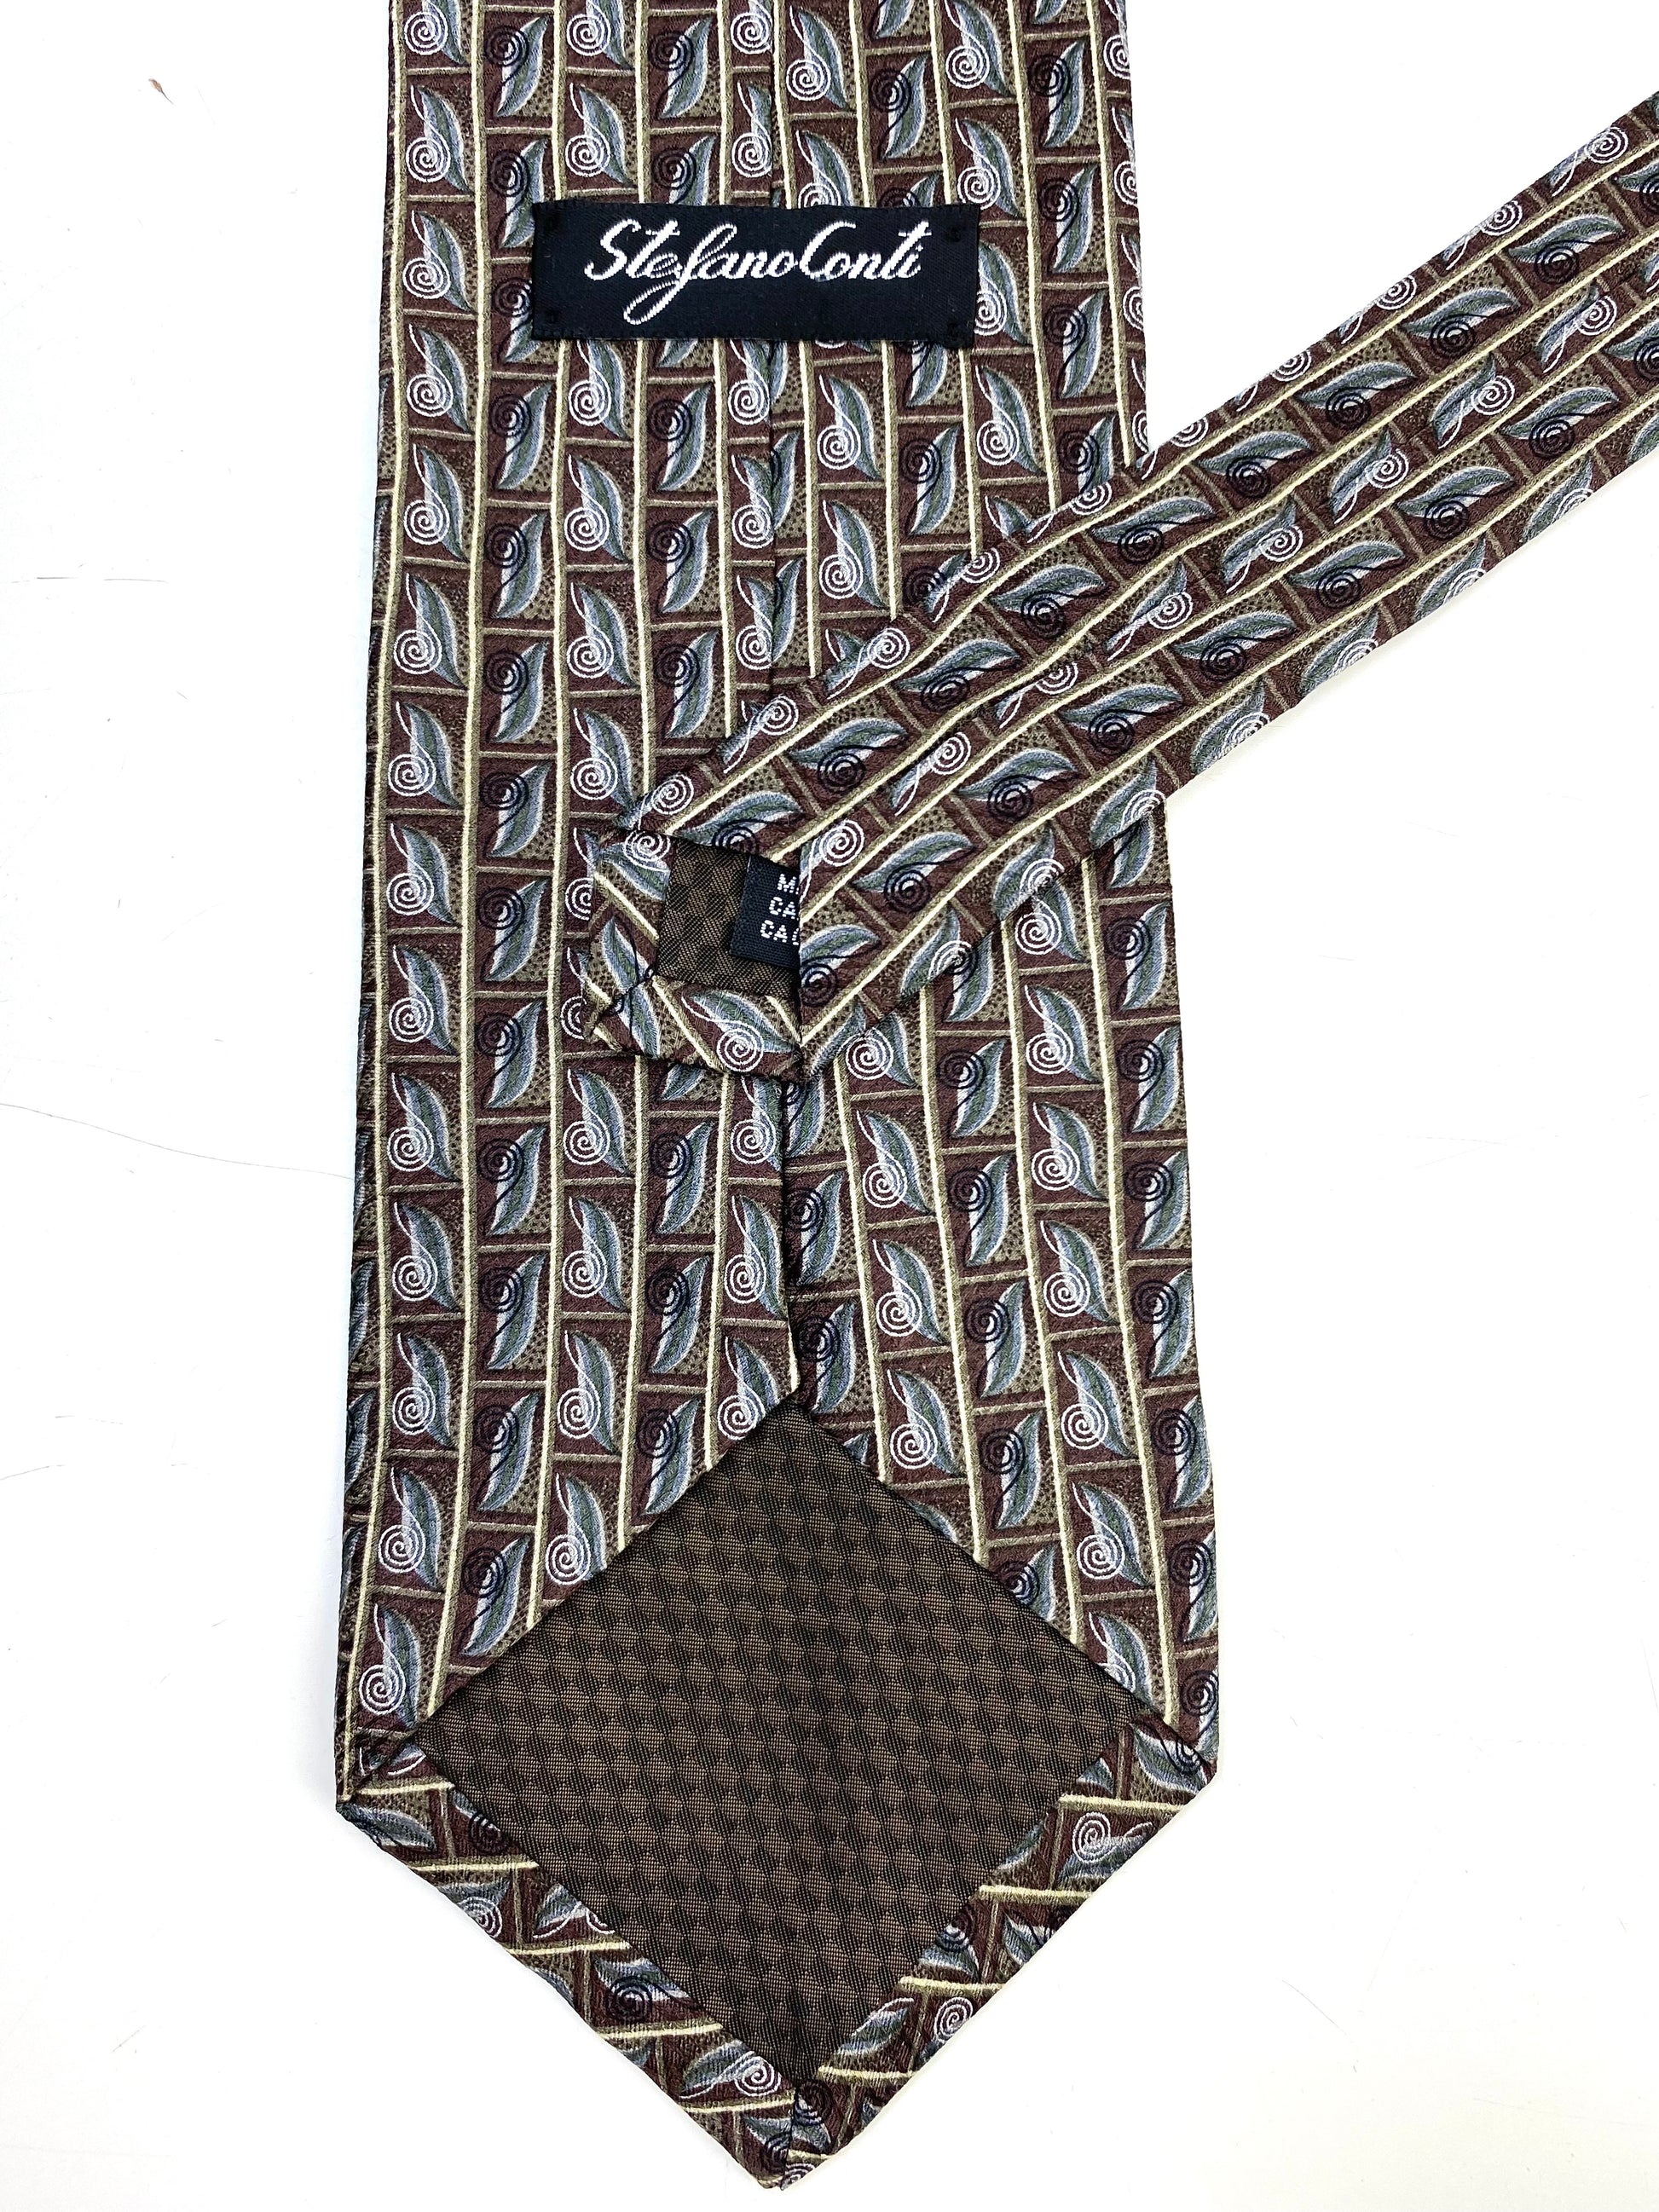 Back and labels of: 90s Deadstock Silk Necktie, Men's Vintage Brown/ Grey Swirl Pattern Tie, NOS